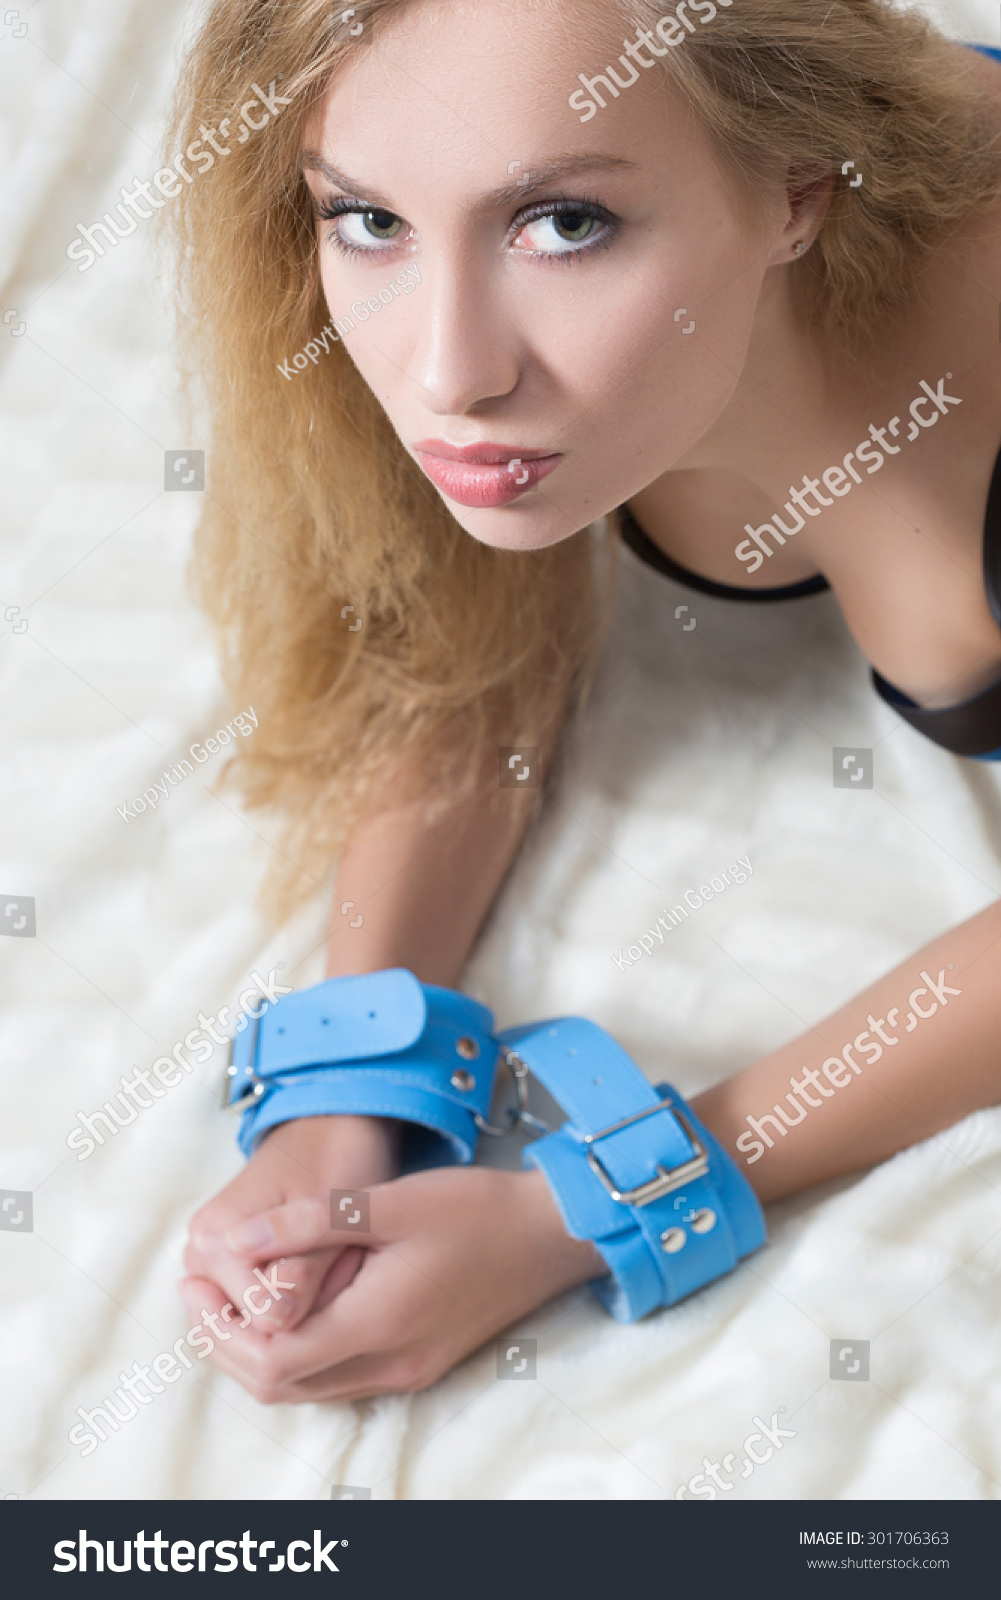 Hot Naked Blond Handcuffs Stock Photo Shutterstock